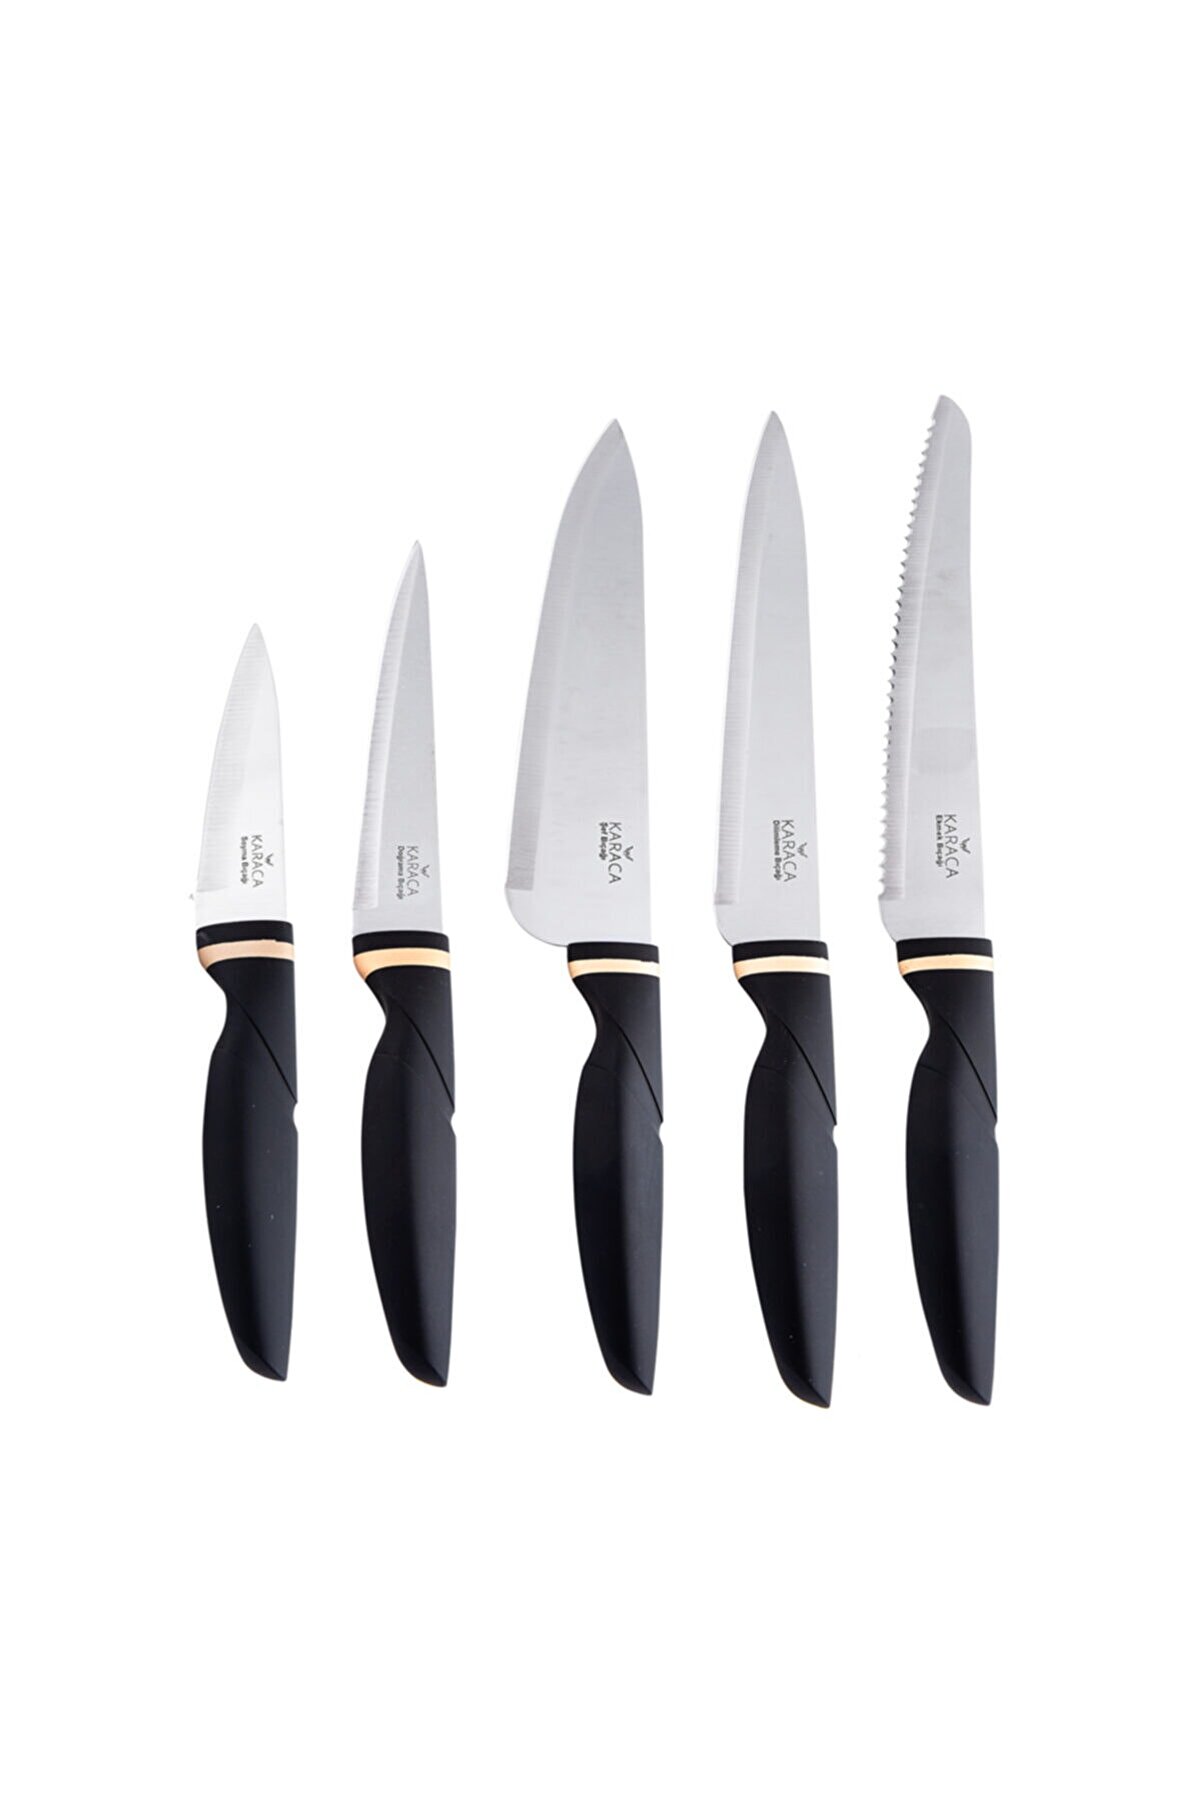 ست چاقوی آشپزخانه 6 پارچه کاراجا مدل Karaca Proofcut